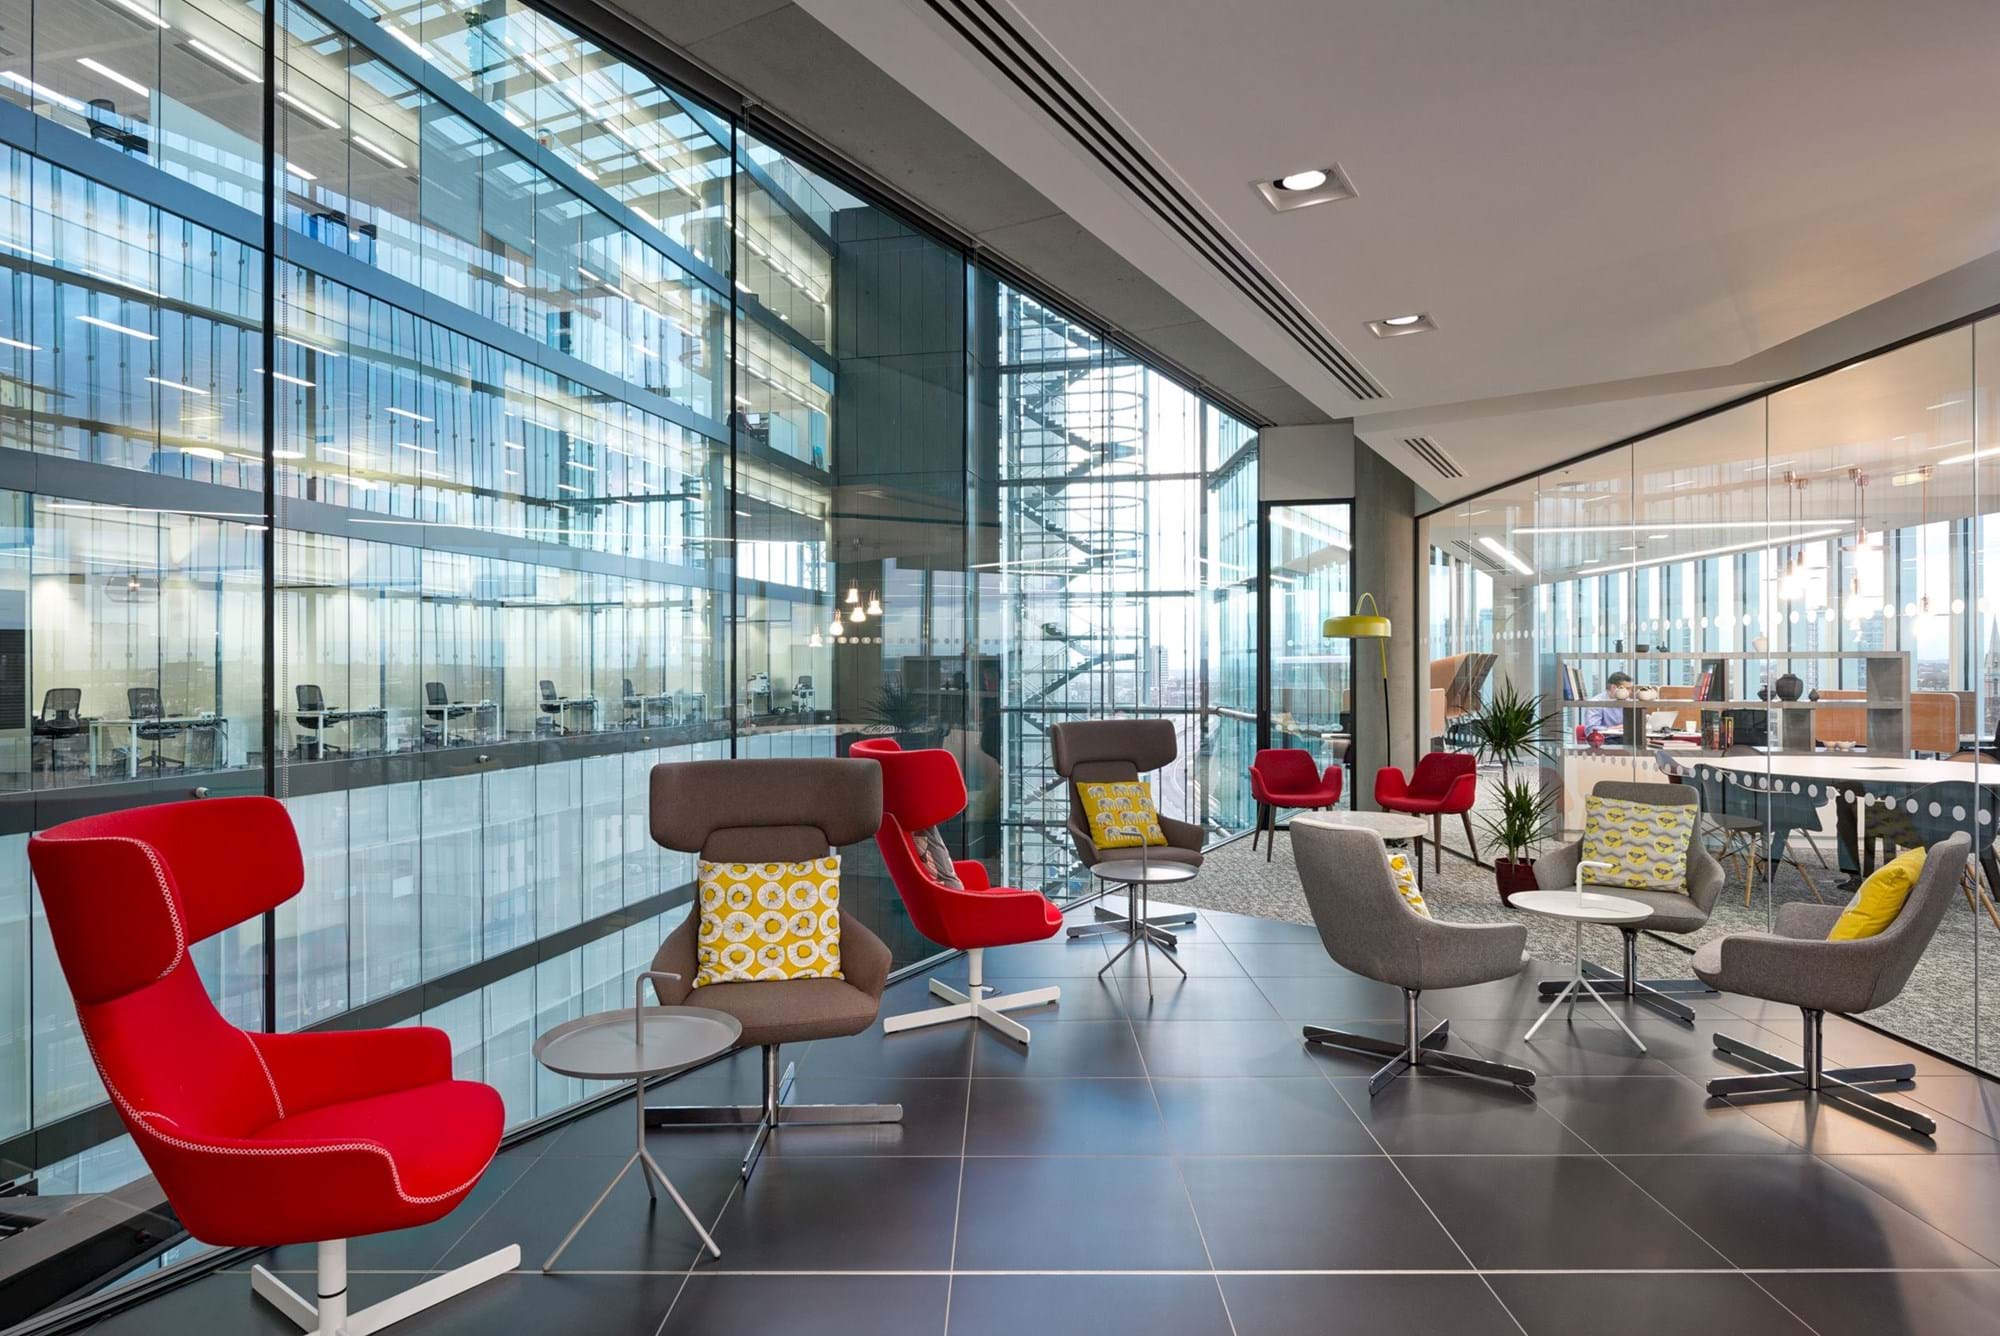 Modus Workspace office design, fit out and refurbishment - Regus Paddington - Reception - Regus paddington 02 highres sRGB.jpg